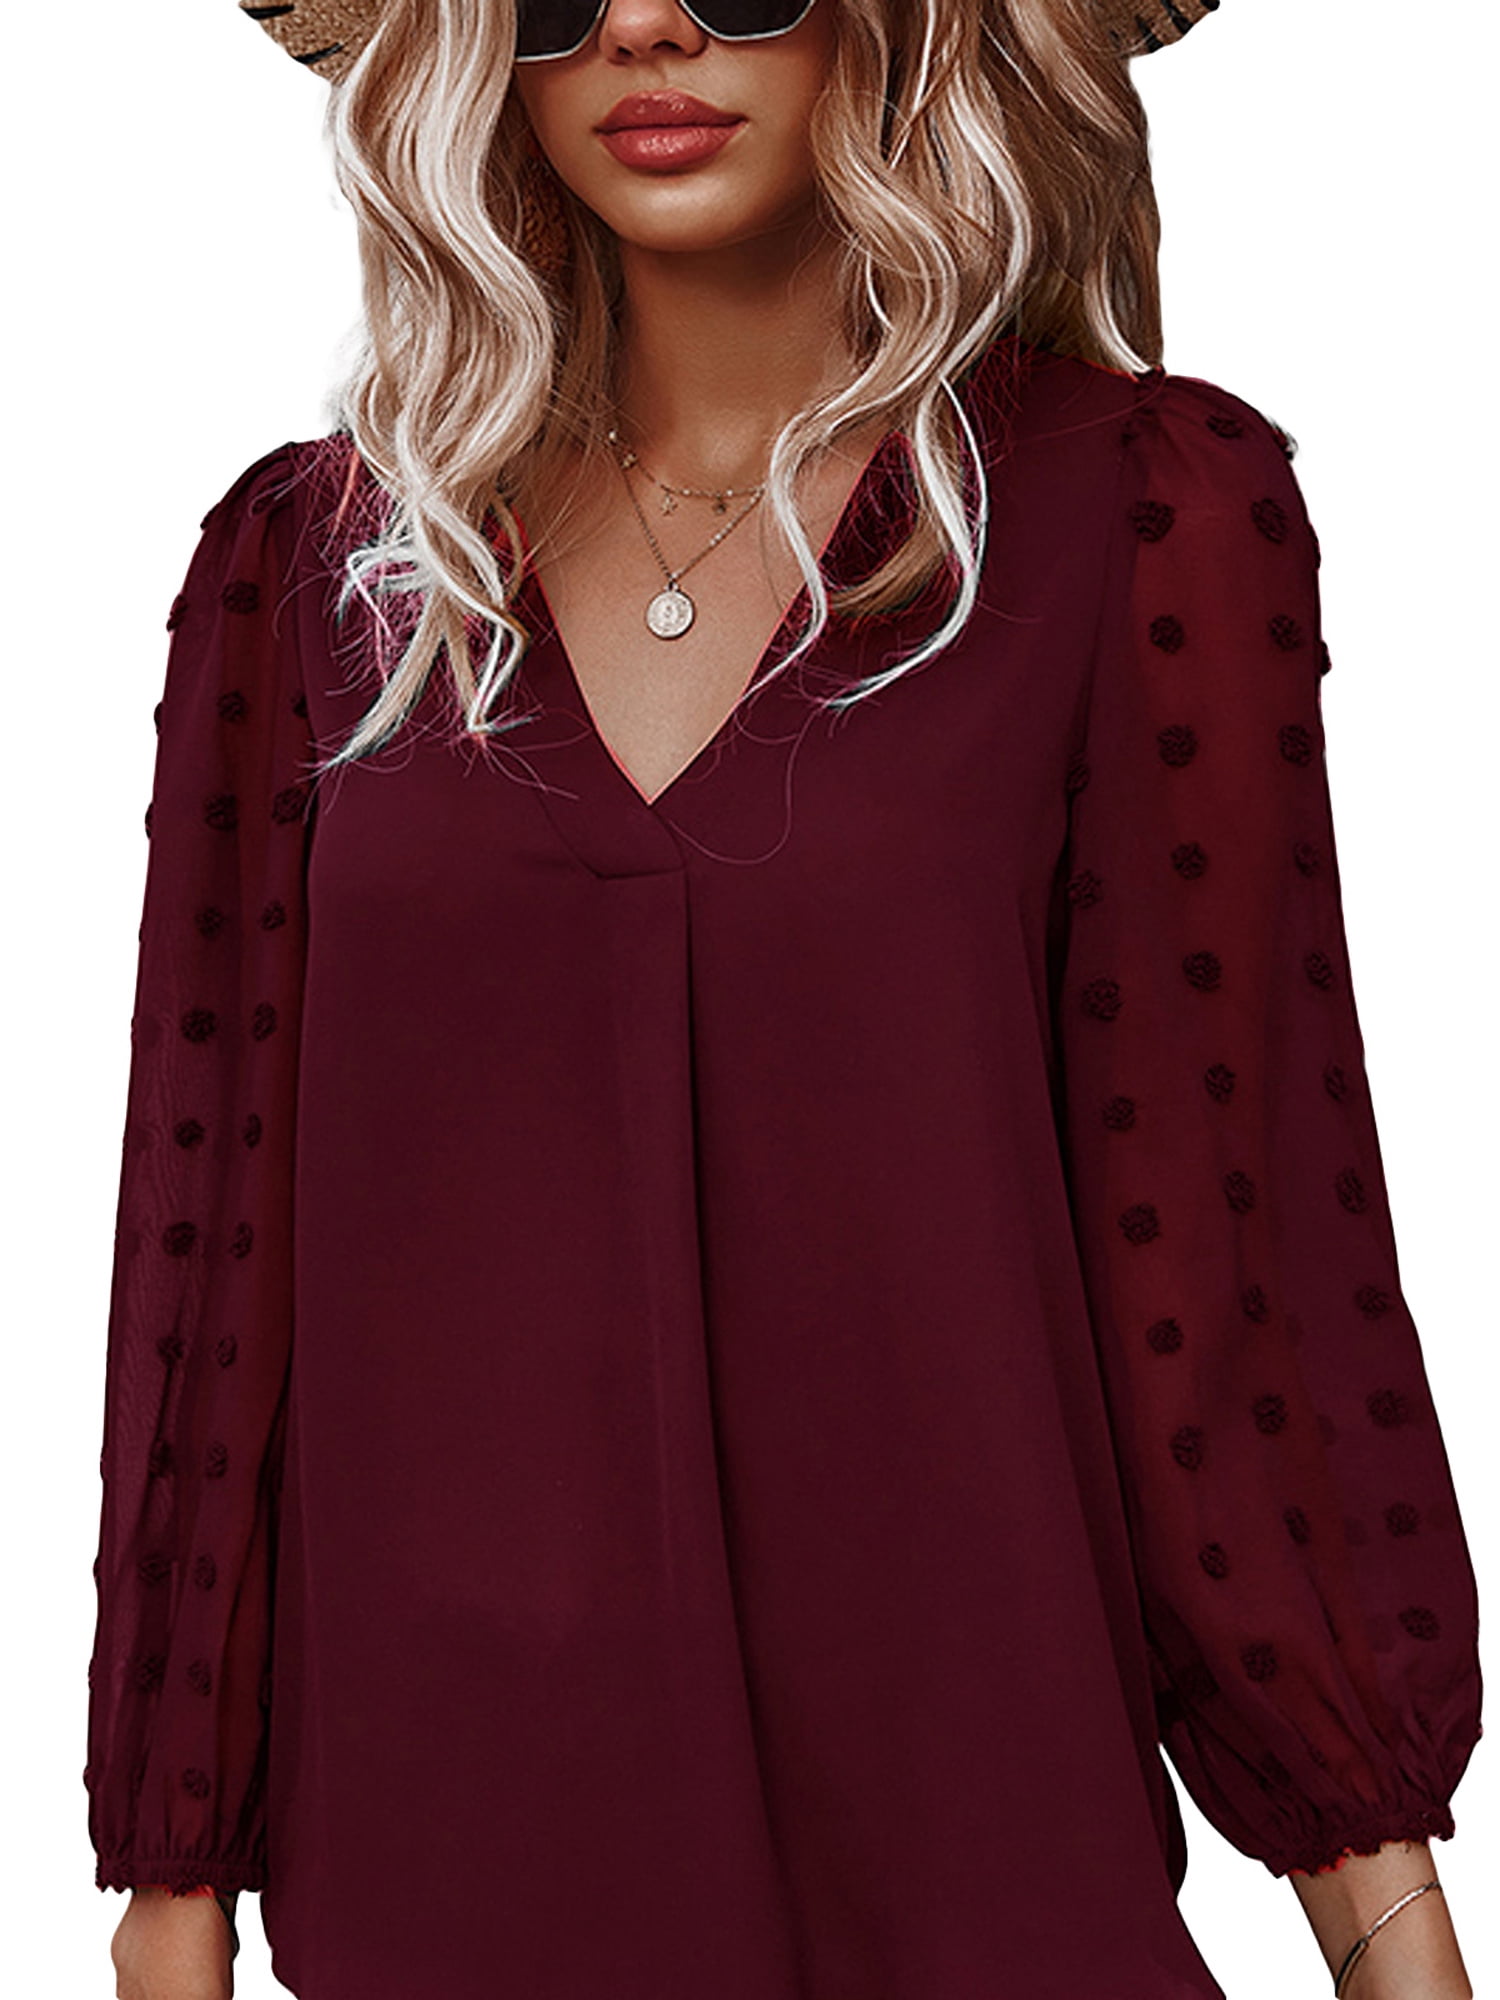 Summer Elegant Tops for Women Business Casual Shirts Jacquard Lace V Neck Shirt Short Sleeve Blouse Swiss Dot Pullover 